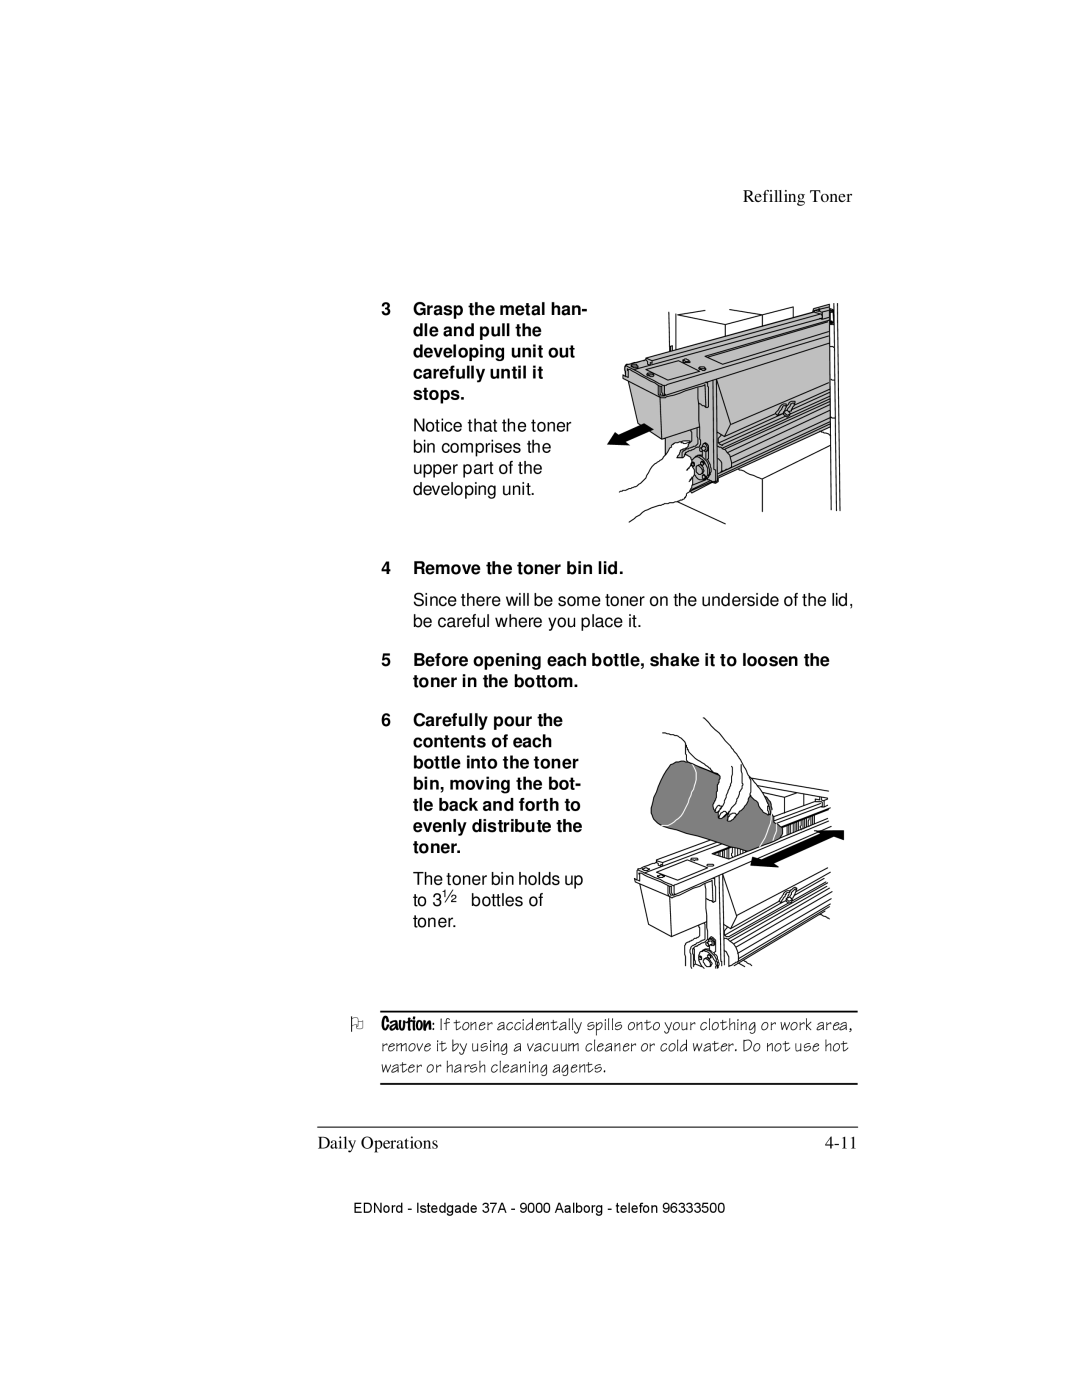 IBM QMS 4525 manual Remove the toner bin lid 